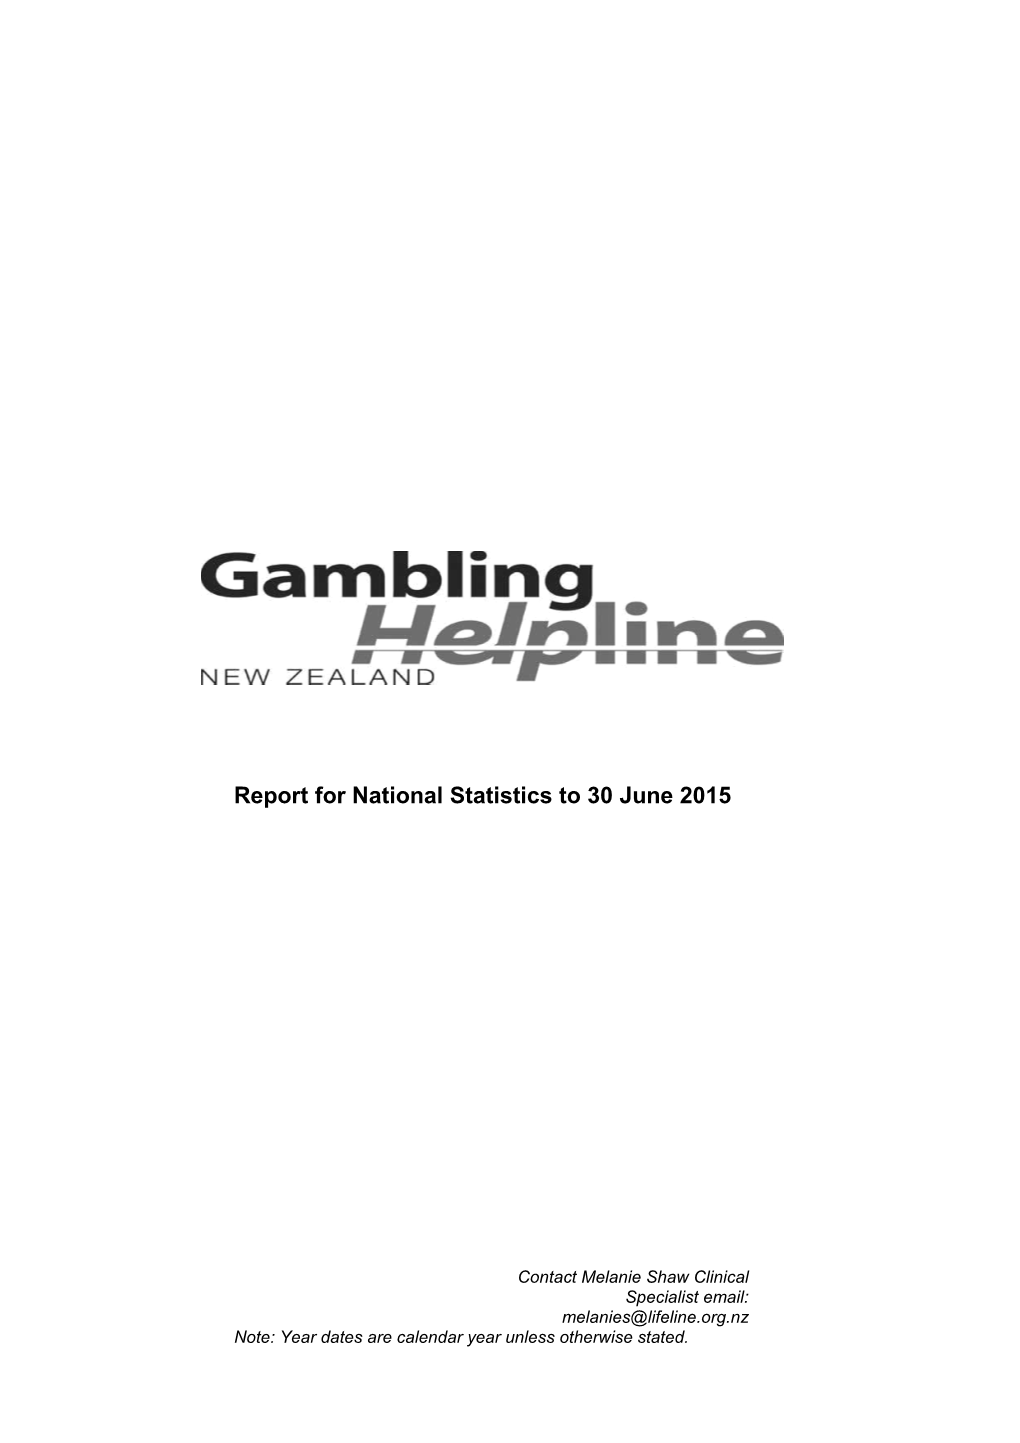 Gambling Helpline Report for National Statistics to 30 June 2015